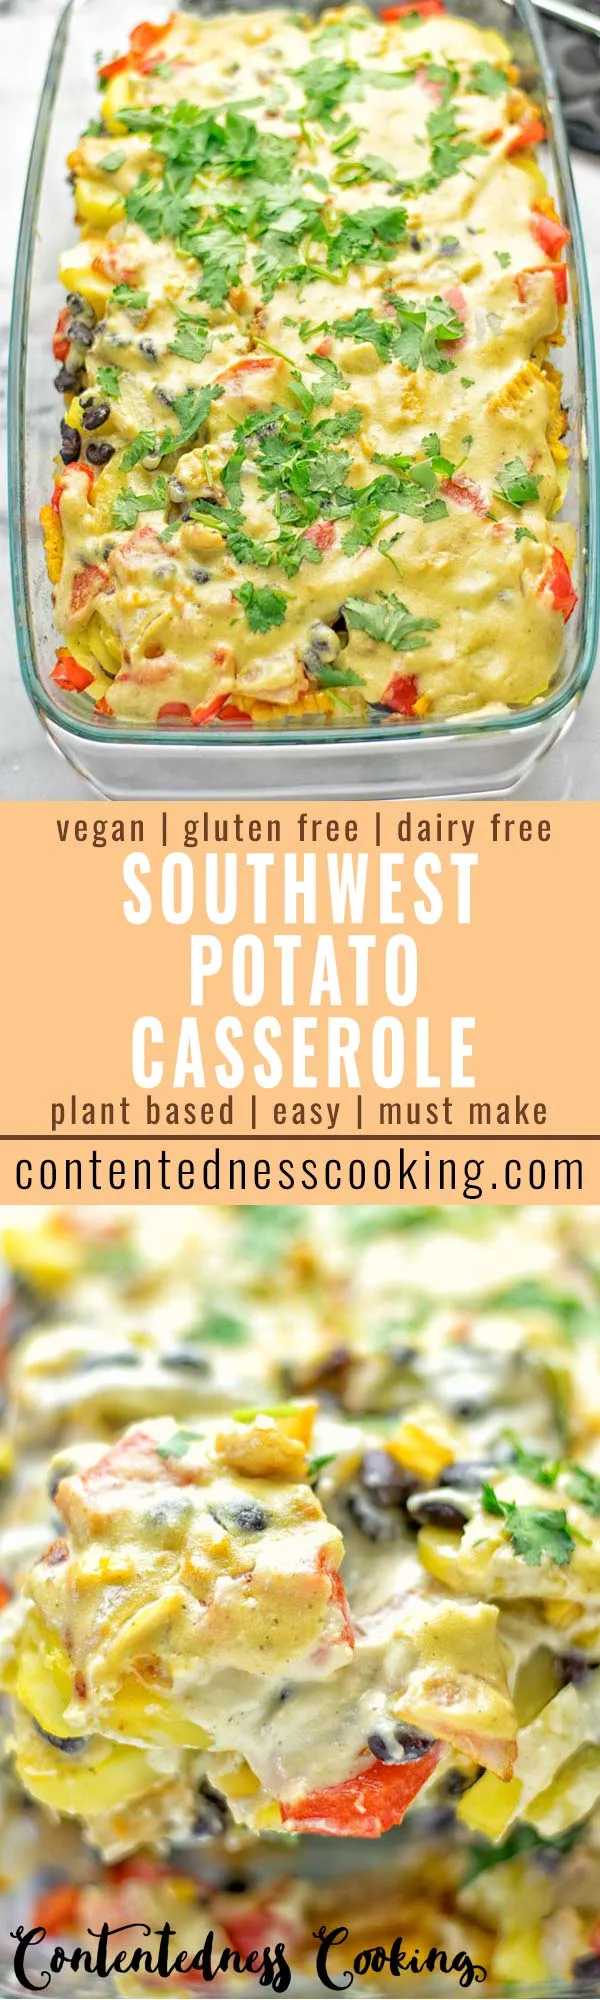 Southwest Potato Casserole | #vegan #glutenfree #dairyfree #plantbased #contentednesscooking